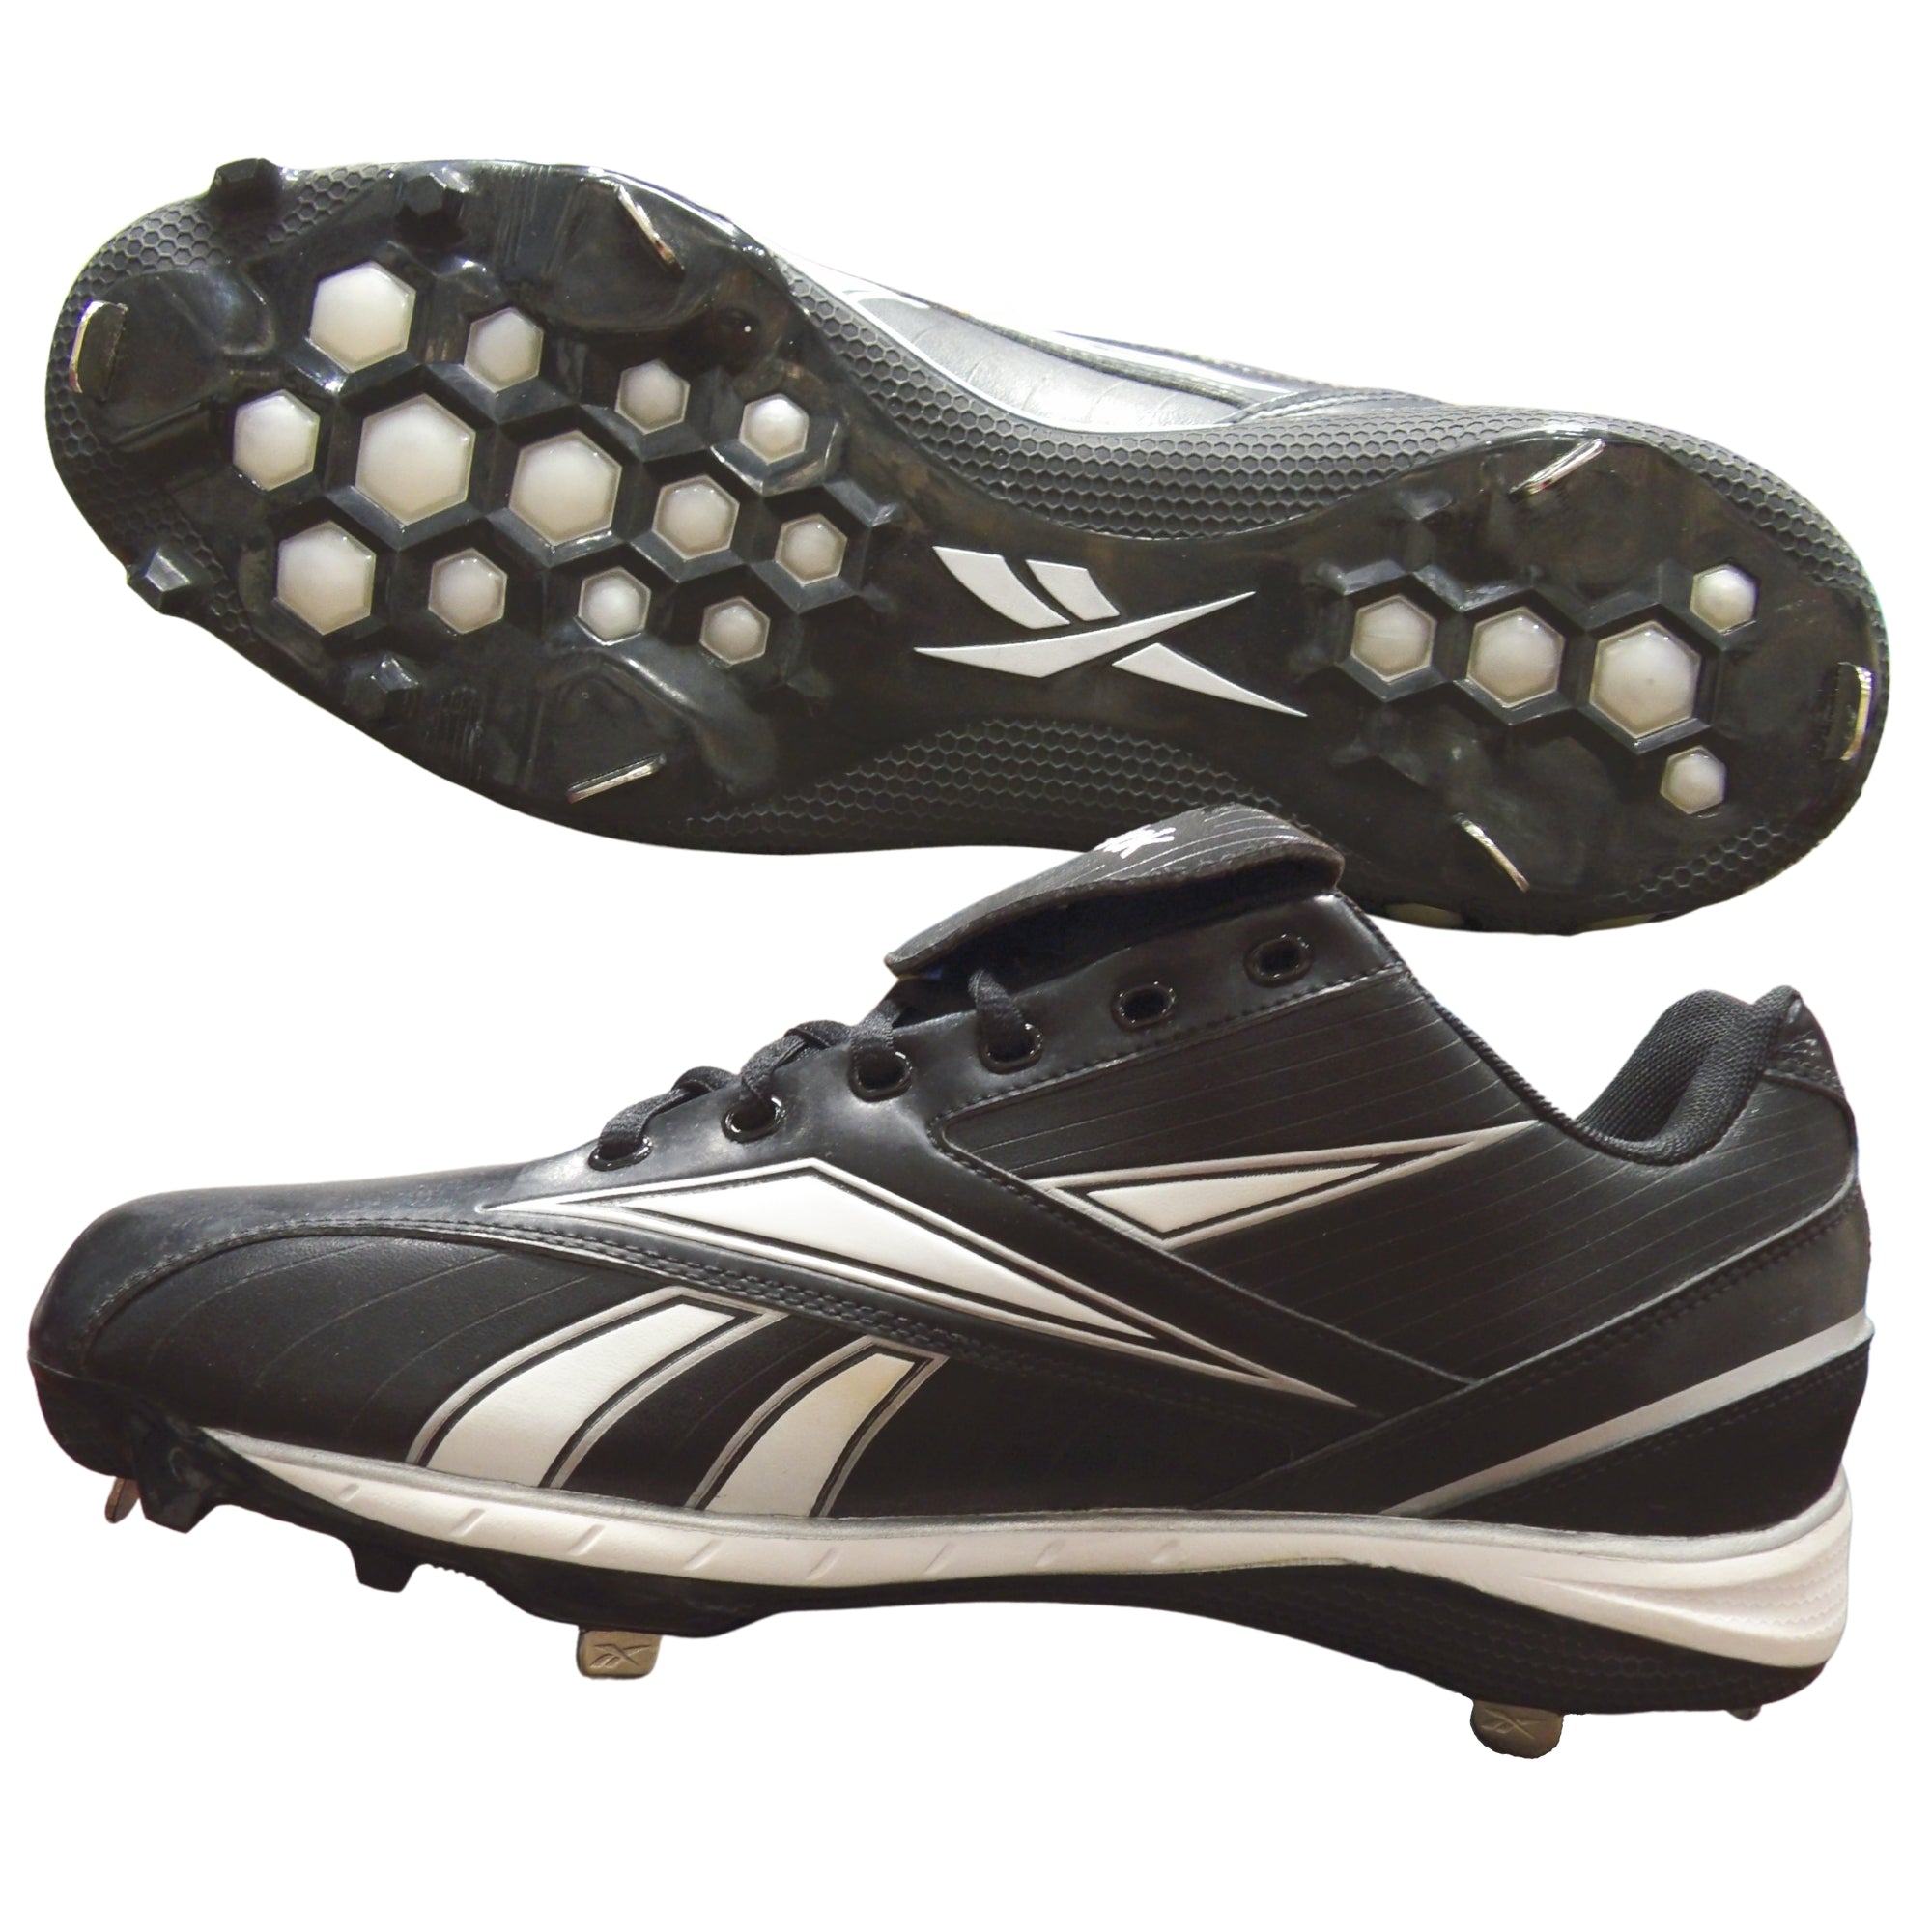 Reebok Cricket Shoes, Model HexRide - White/Black